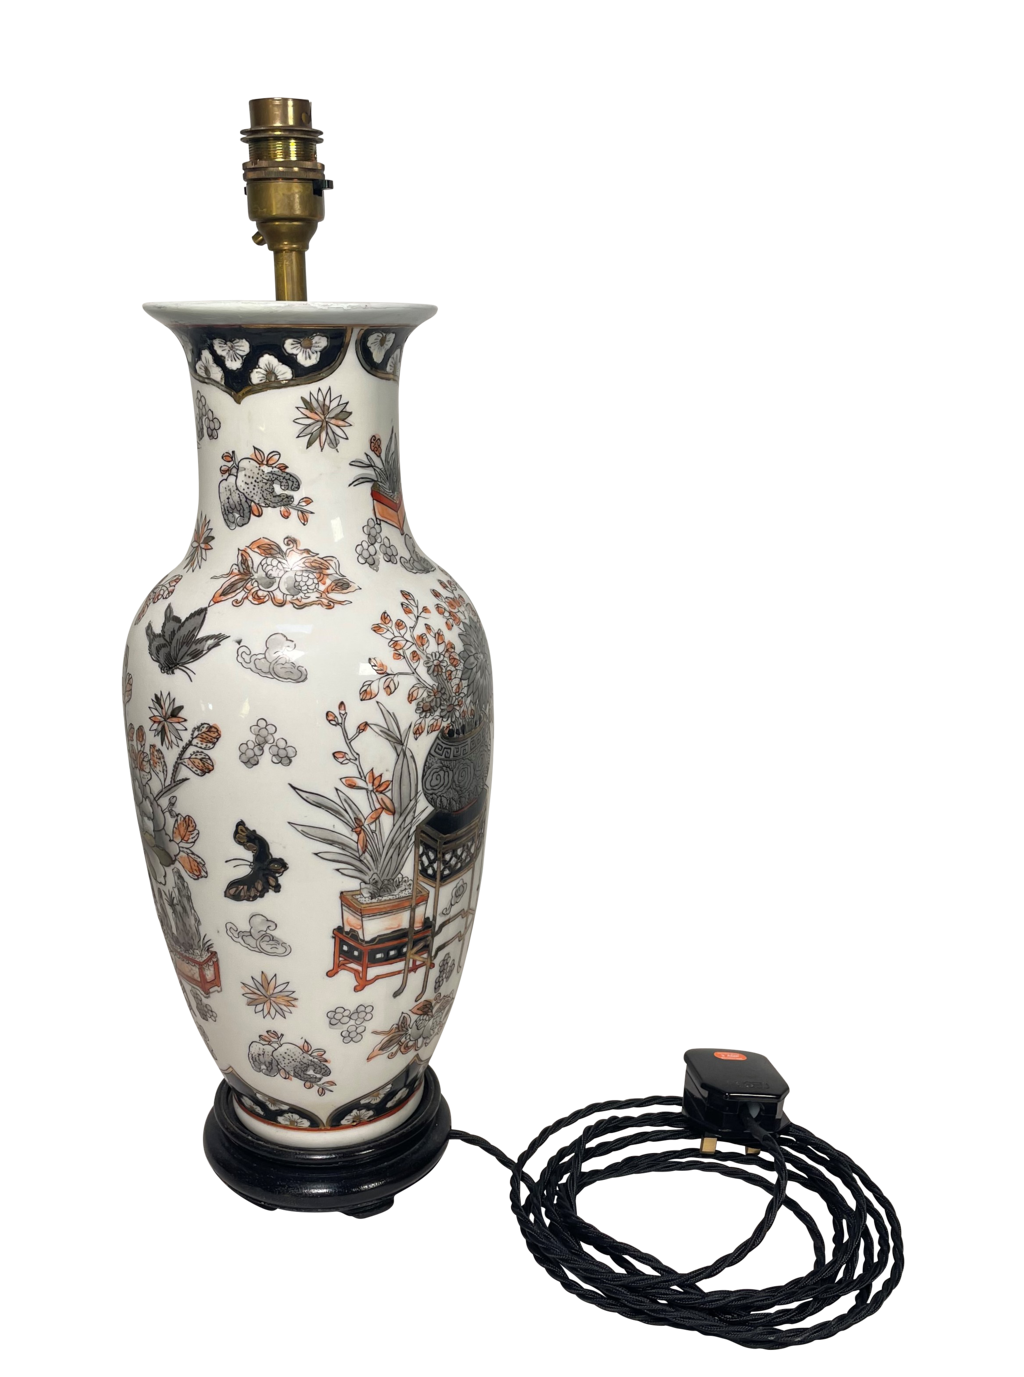 Chinese Vase Lamp